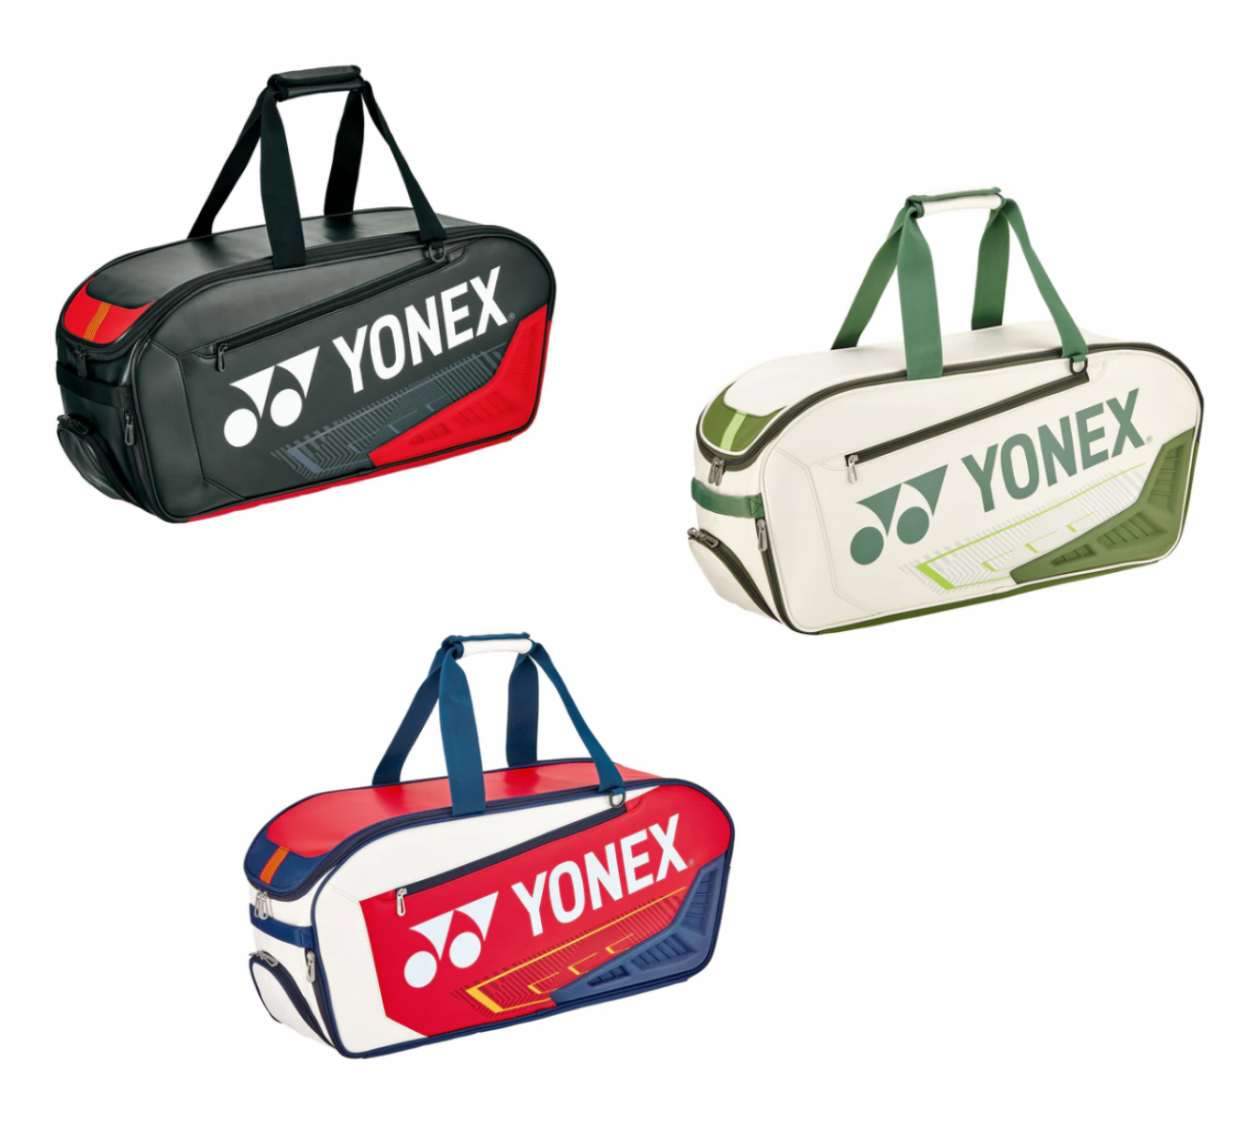 YONEX Expert Tournament Bag - BA02331WEX - 73 x 20 x 32 cm